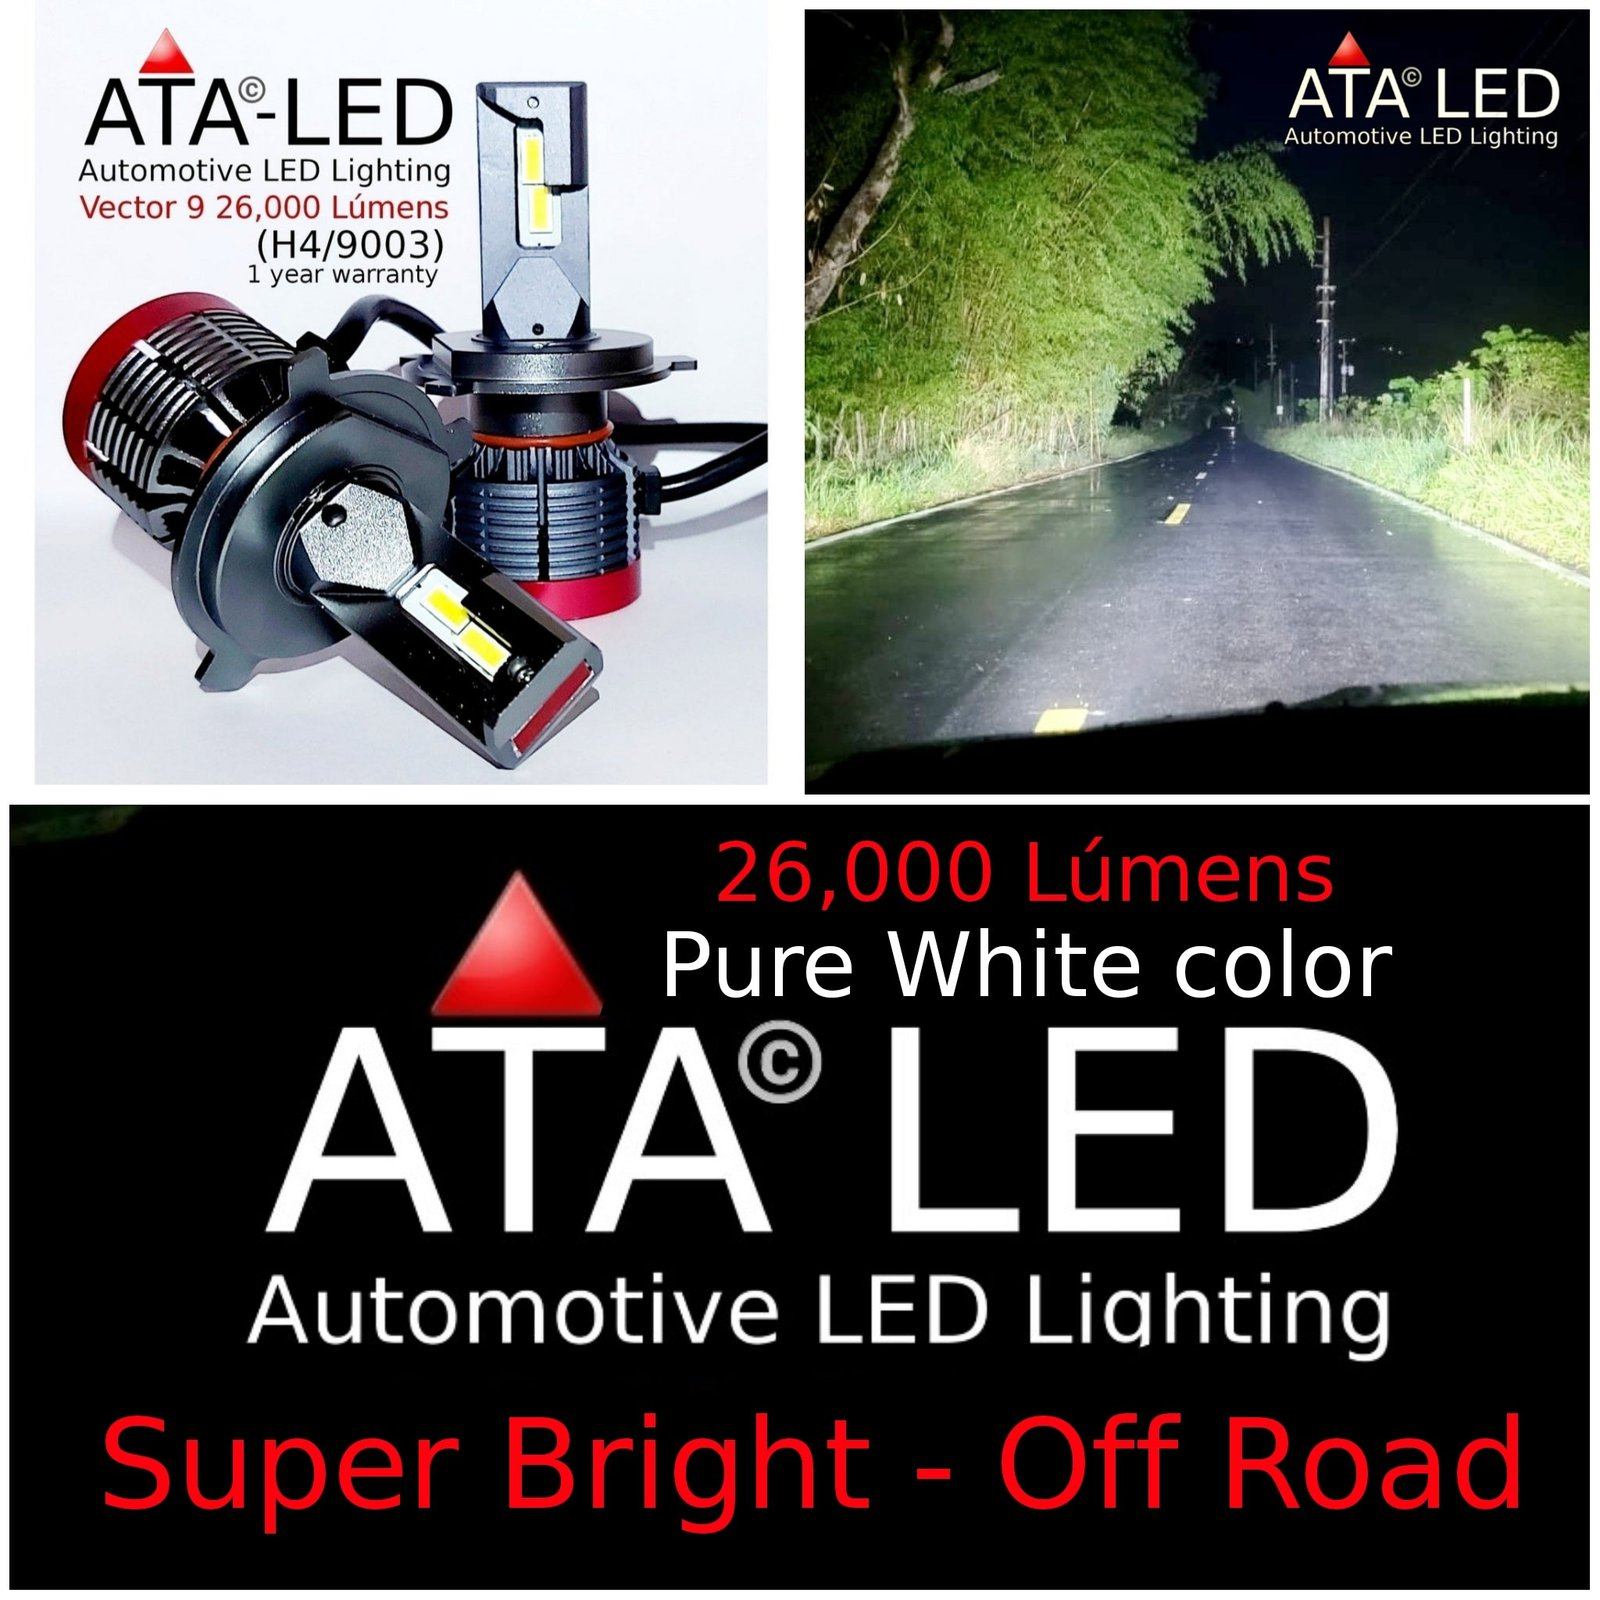 H4 9003 Vector 9 26000 Lumens 1 Year Warranty  Pure White color Super Bright Off Road